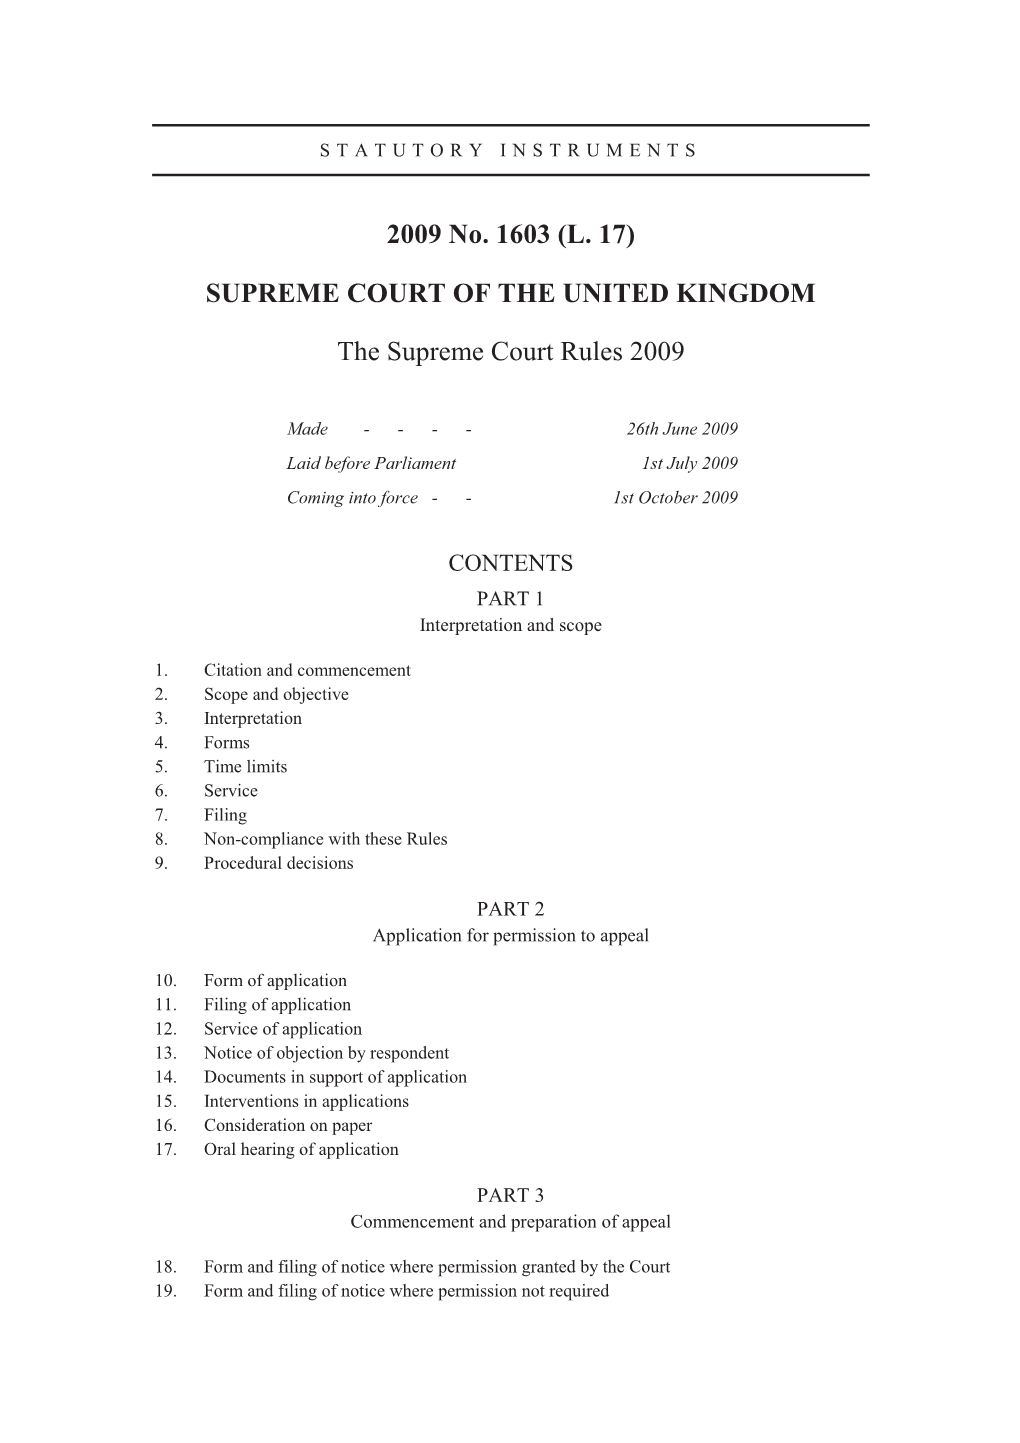 2009 No. 1603 (L. 17) SUPREME COURT of the UNITED